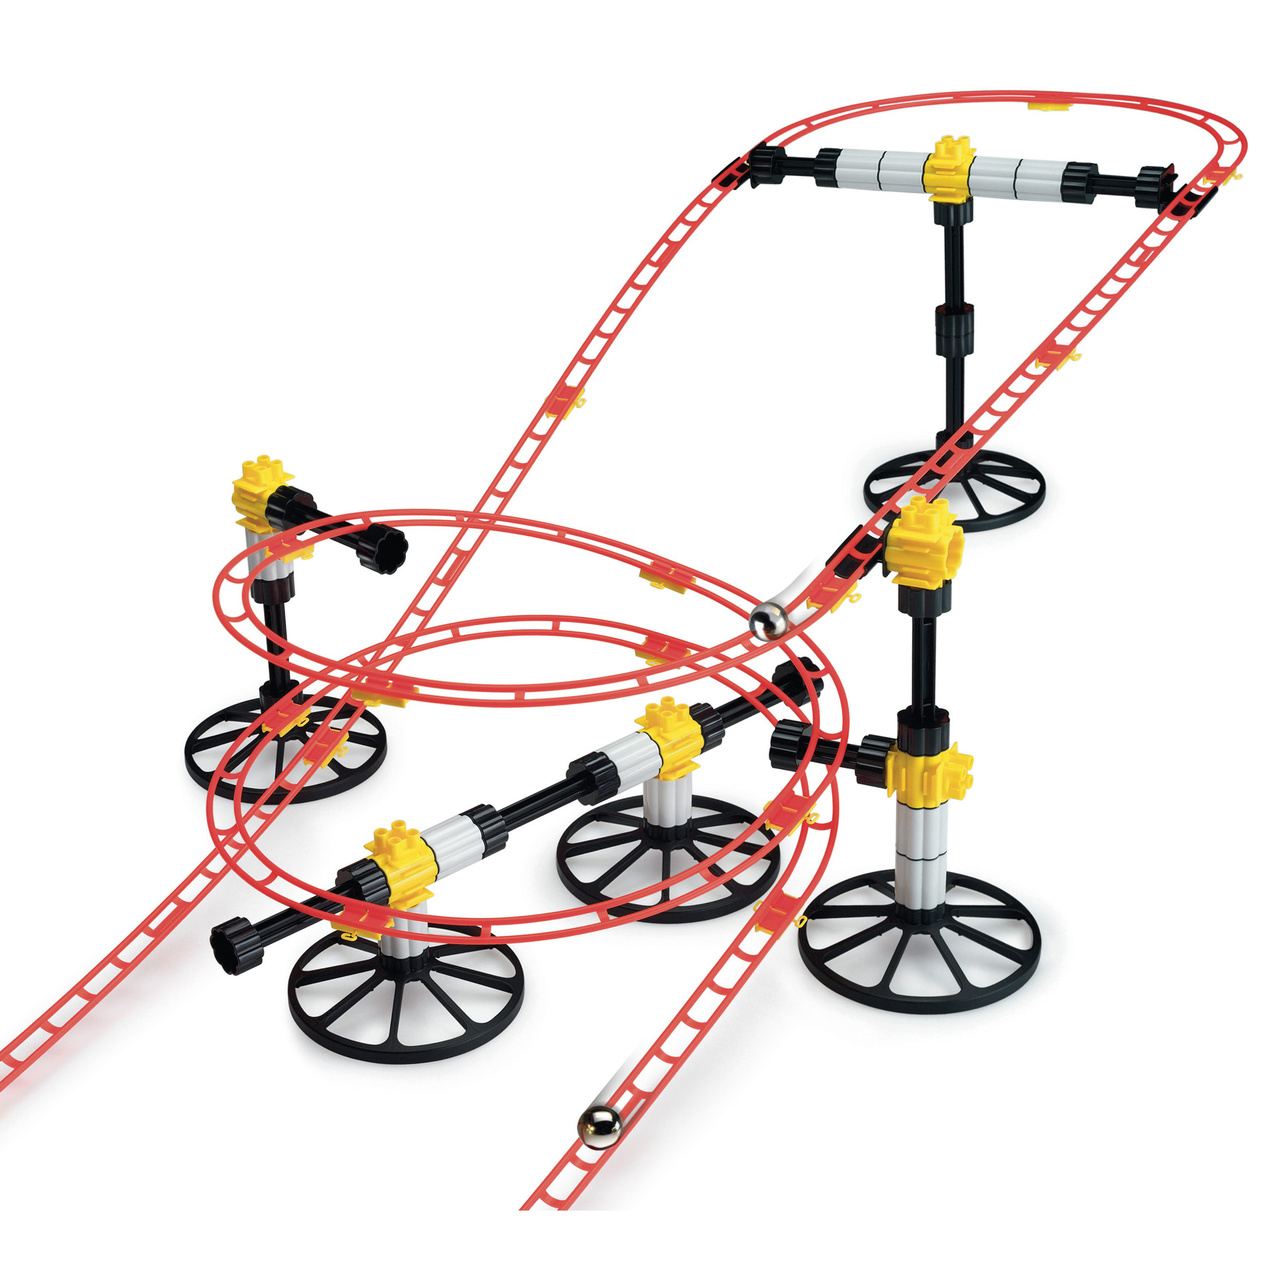 Konstruktionsspielzeug quercetti skyrail roller coaster mini